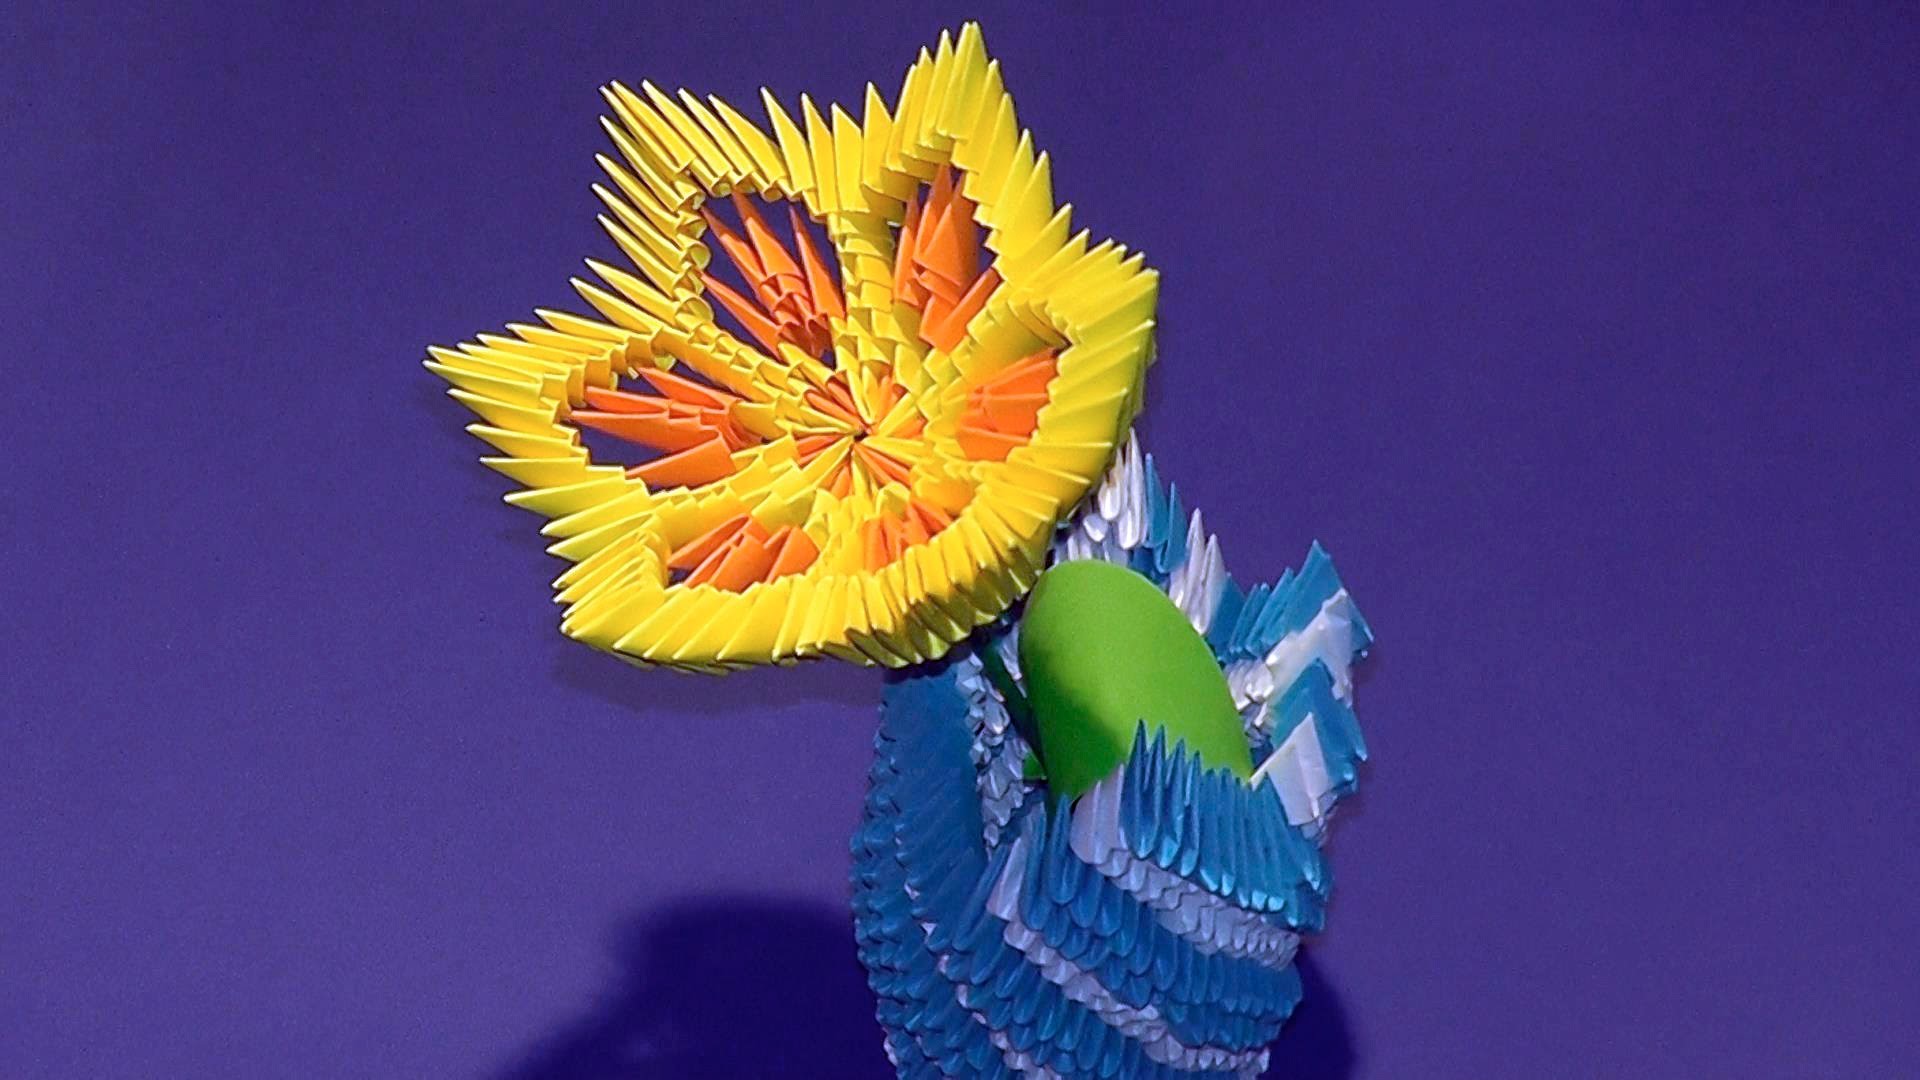 3d origami flower tutorial